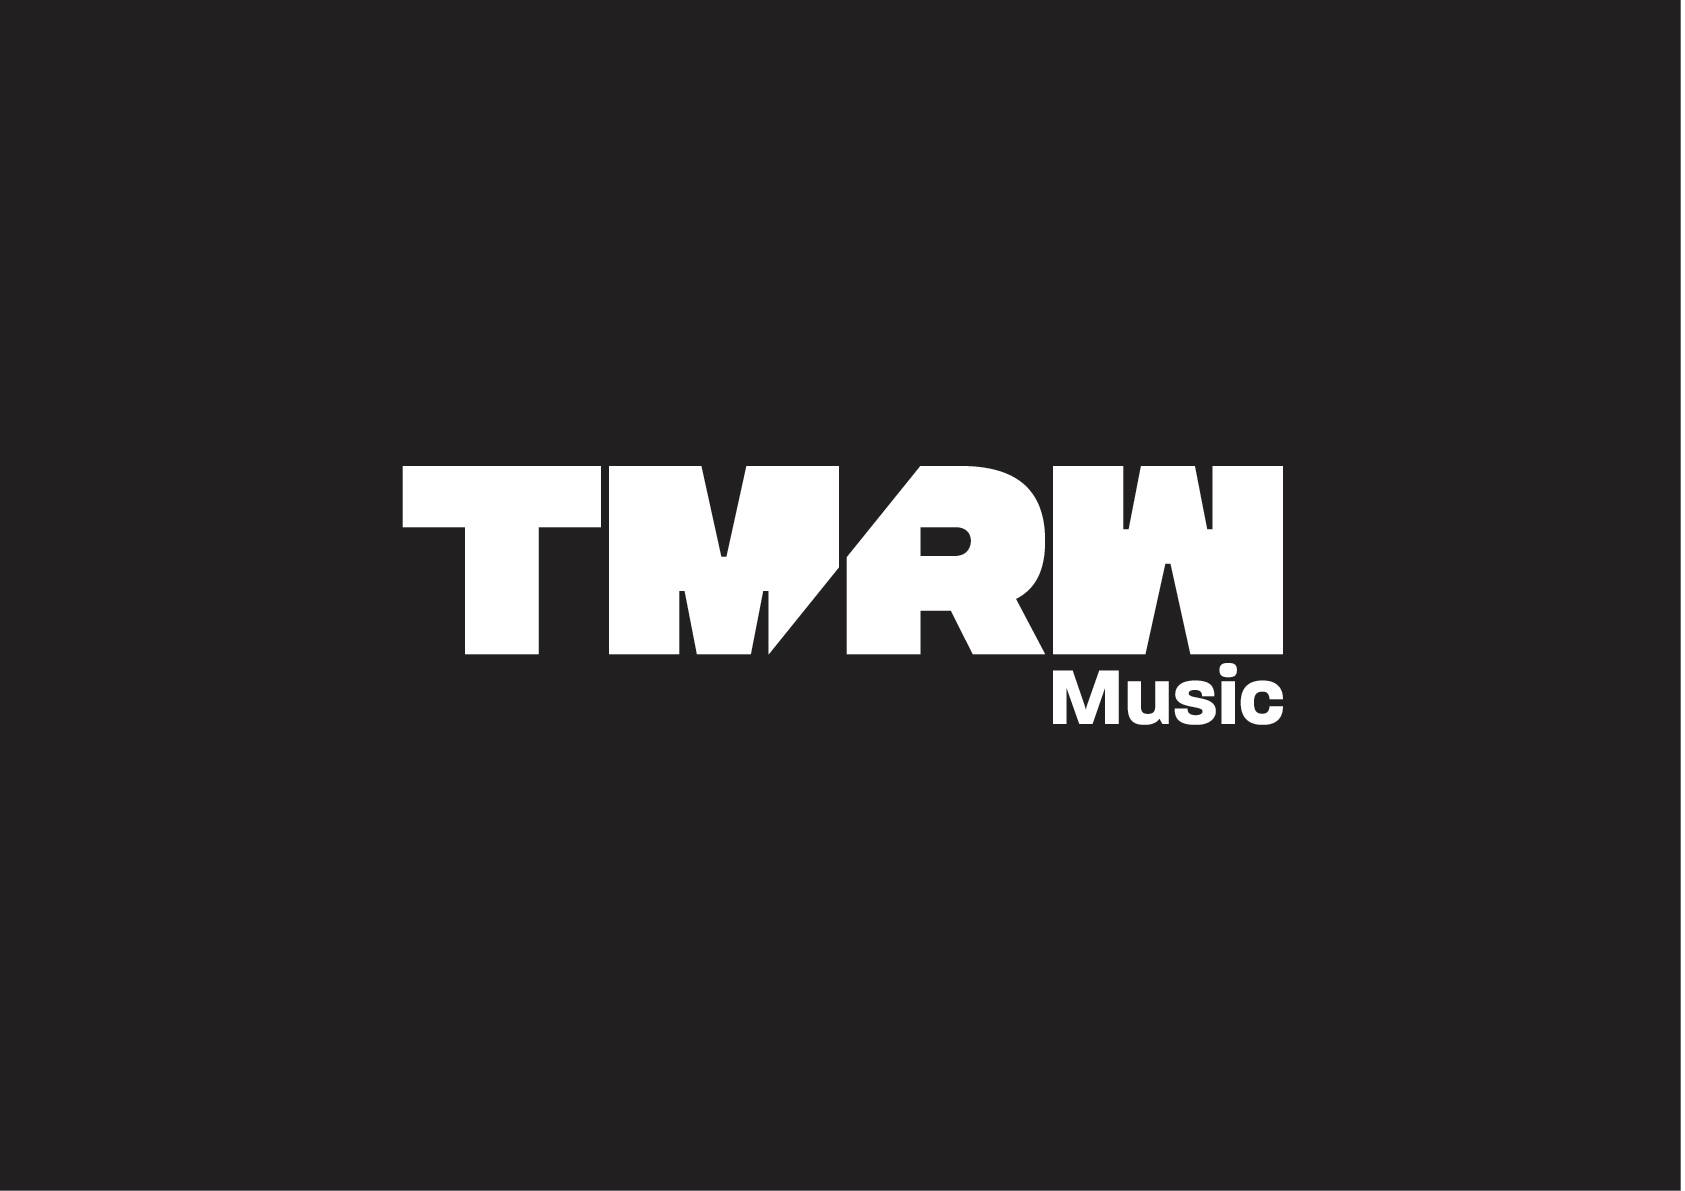 Ministry of Sound Australia rebrands to TMRW Music